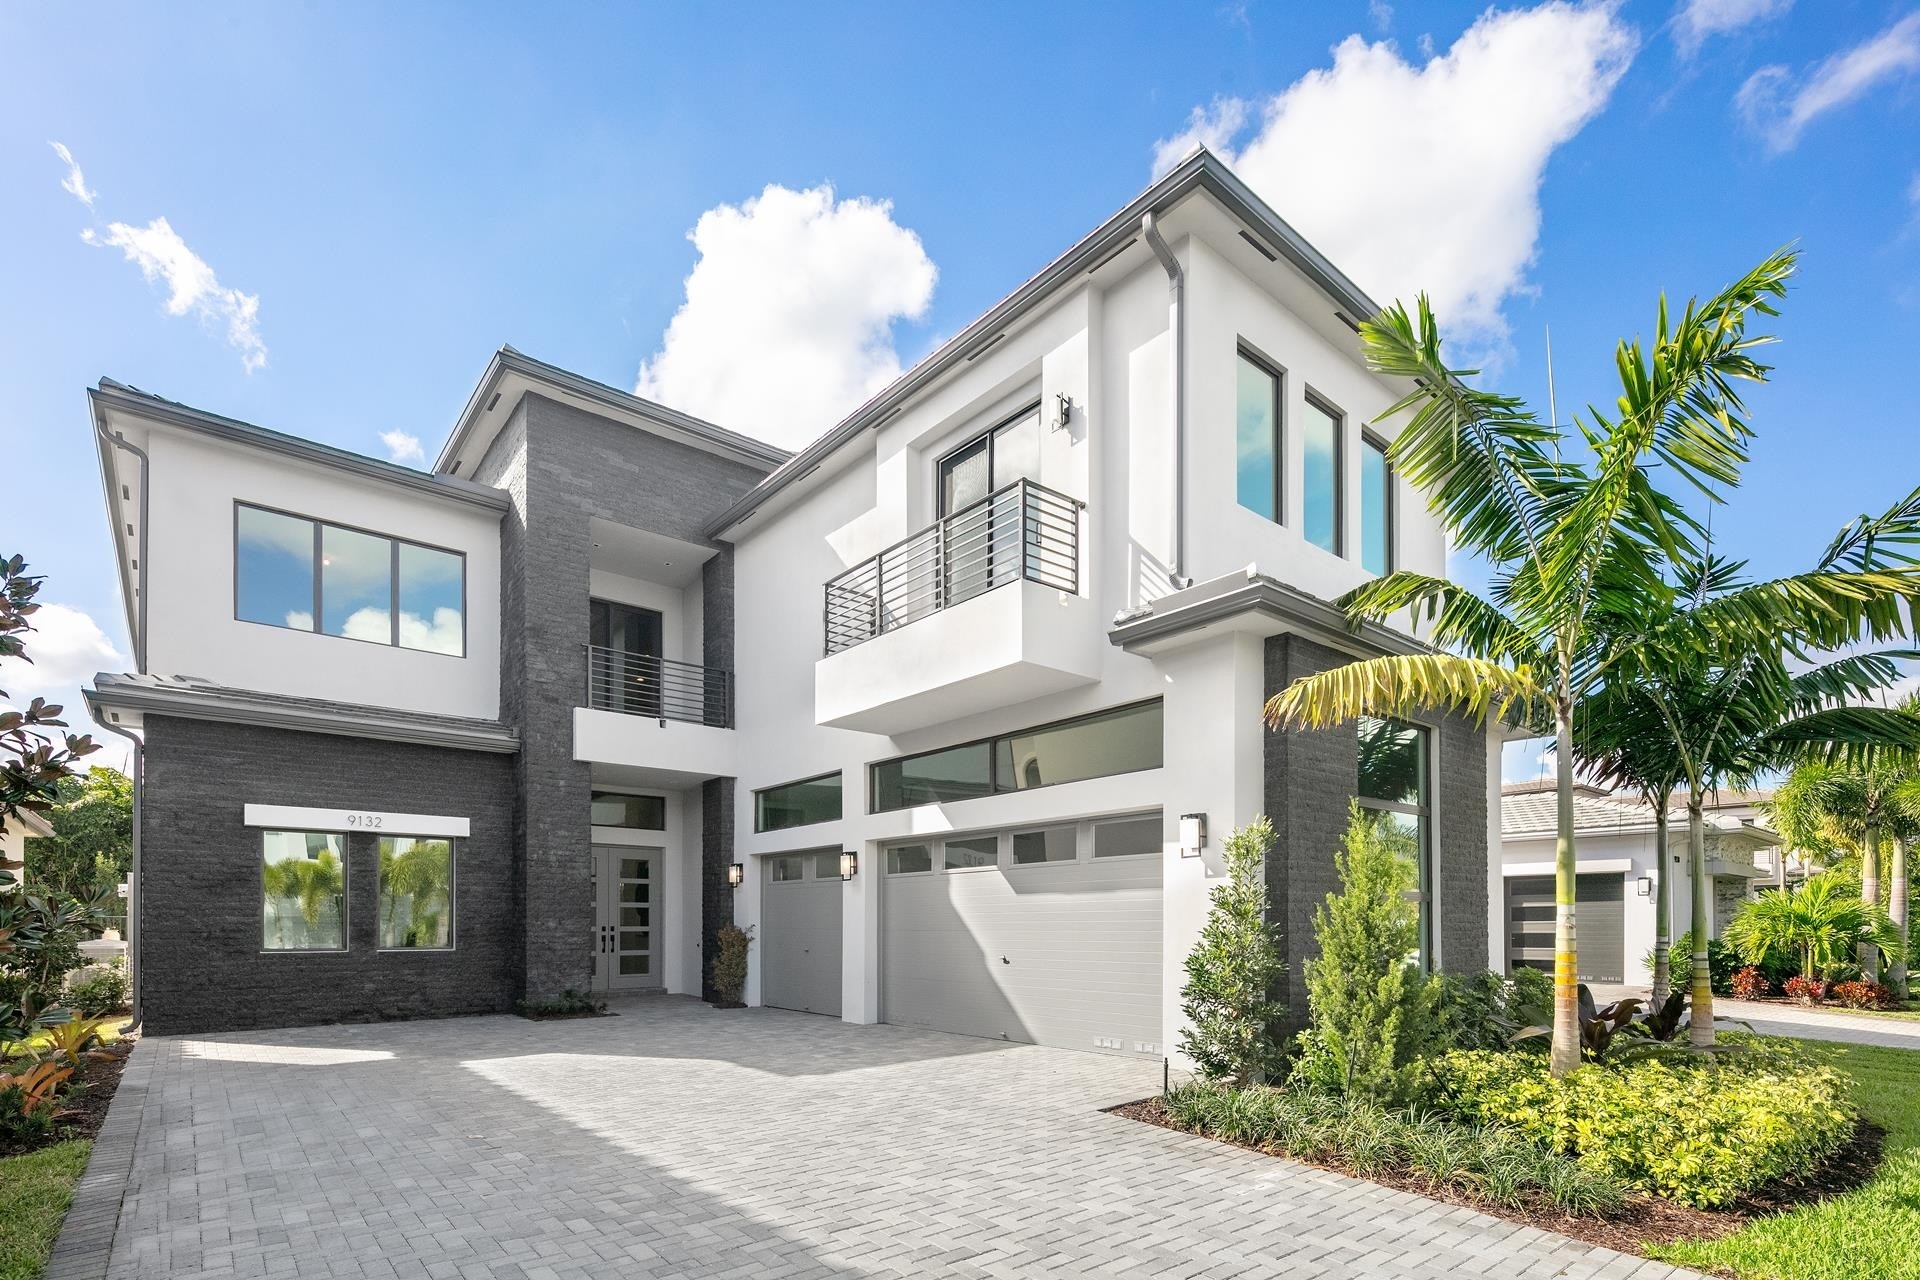 Single Family Home for Sale at Boca Raton, FL 33496